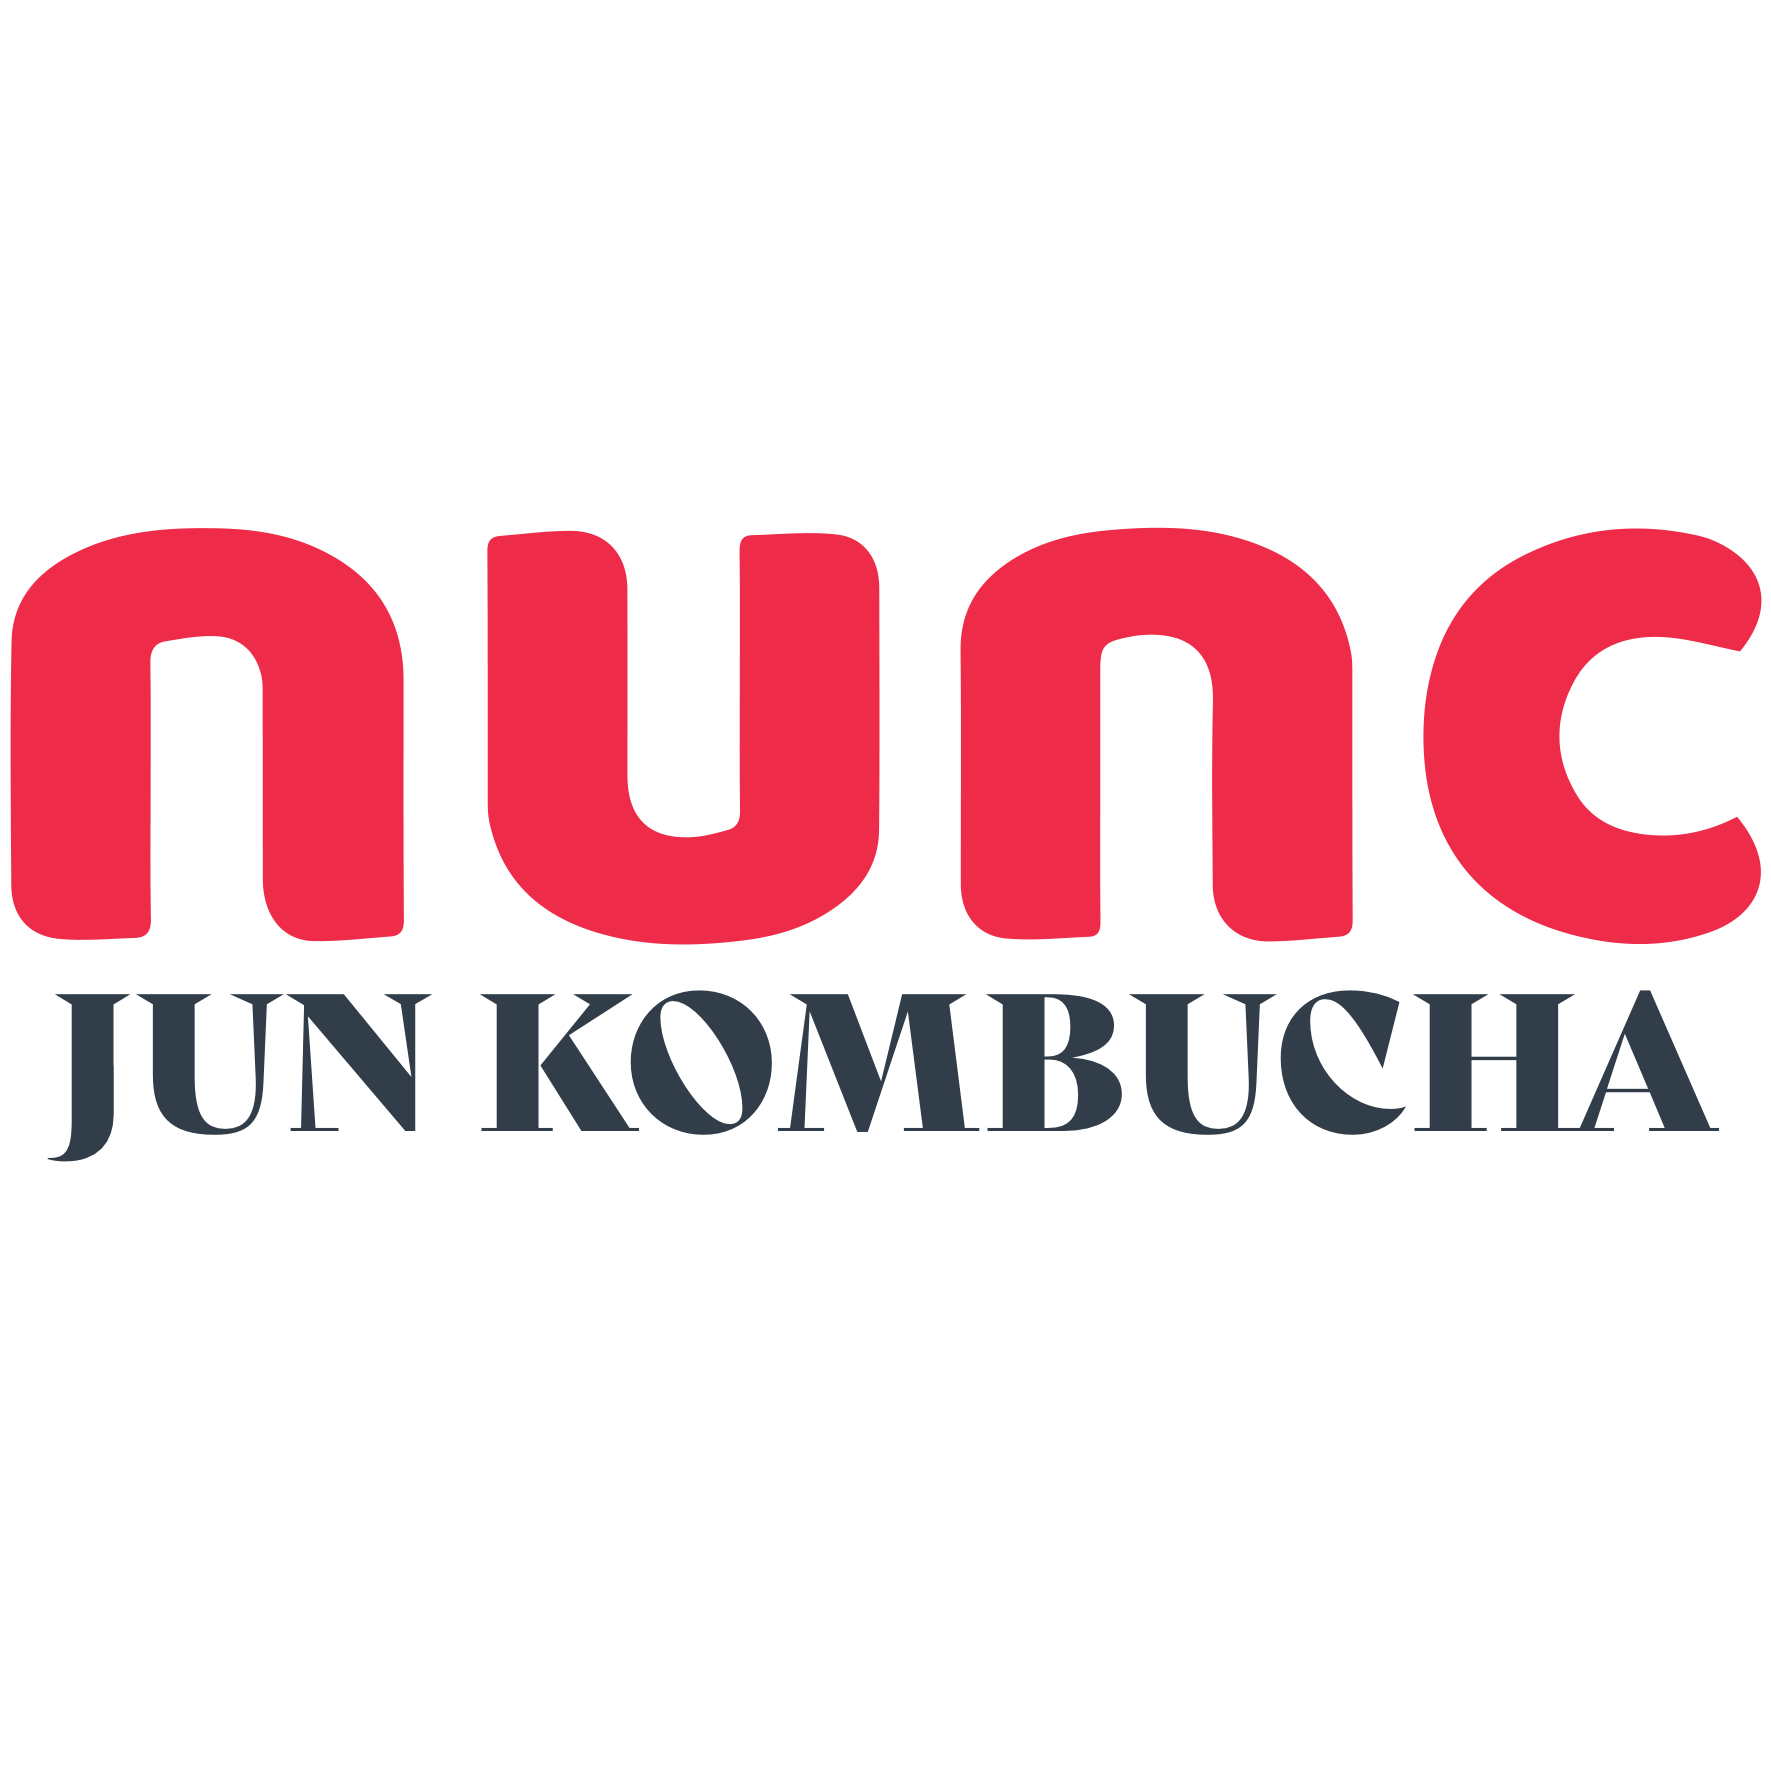 nunc